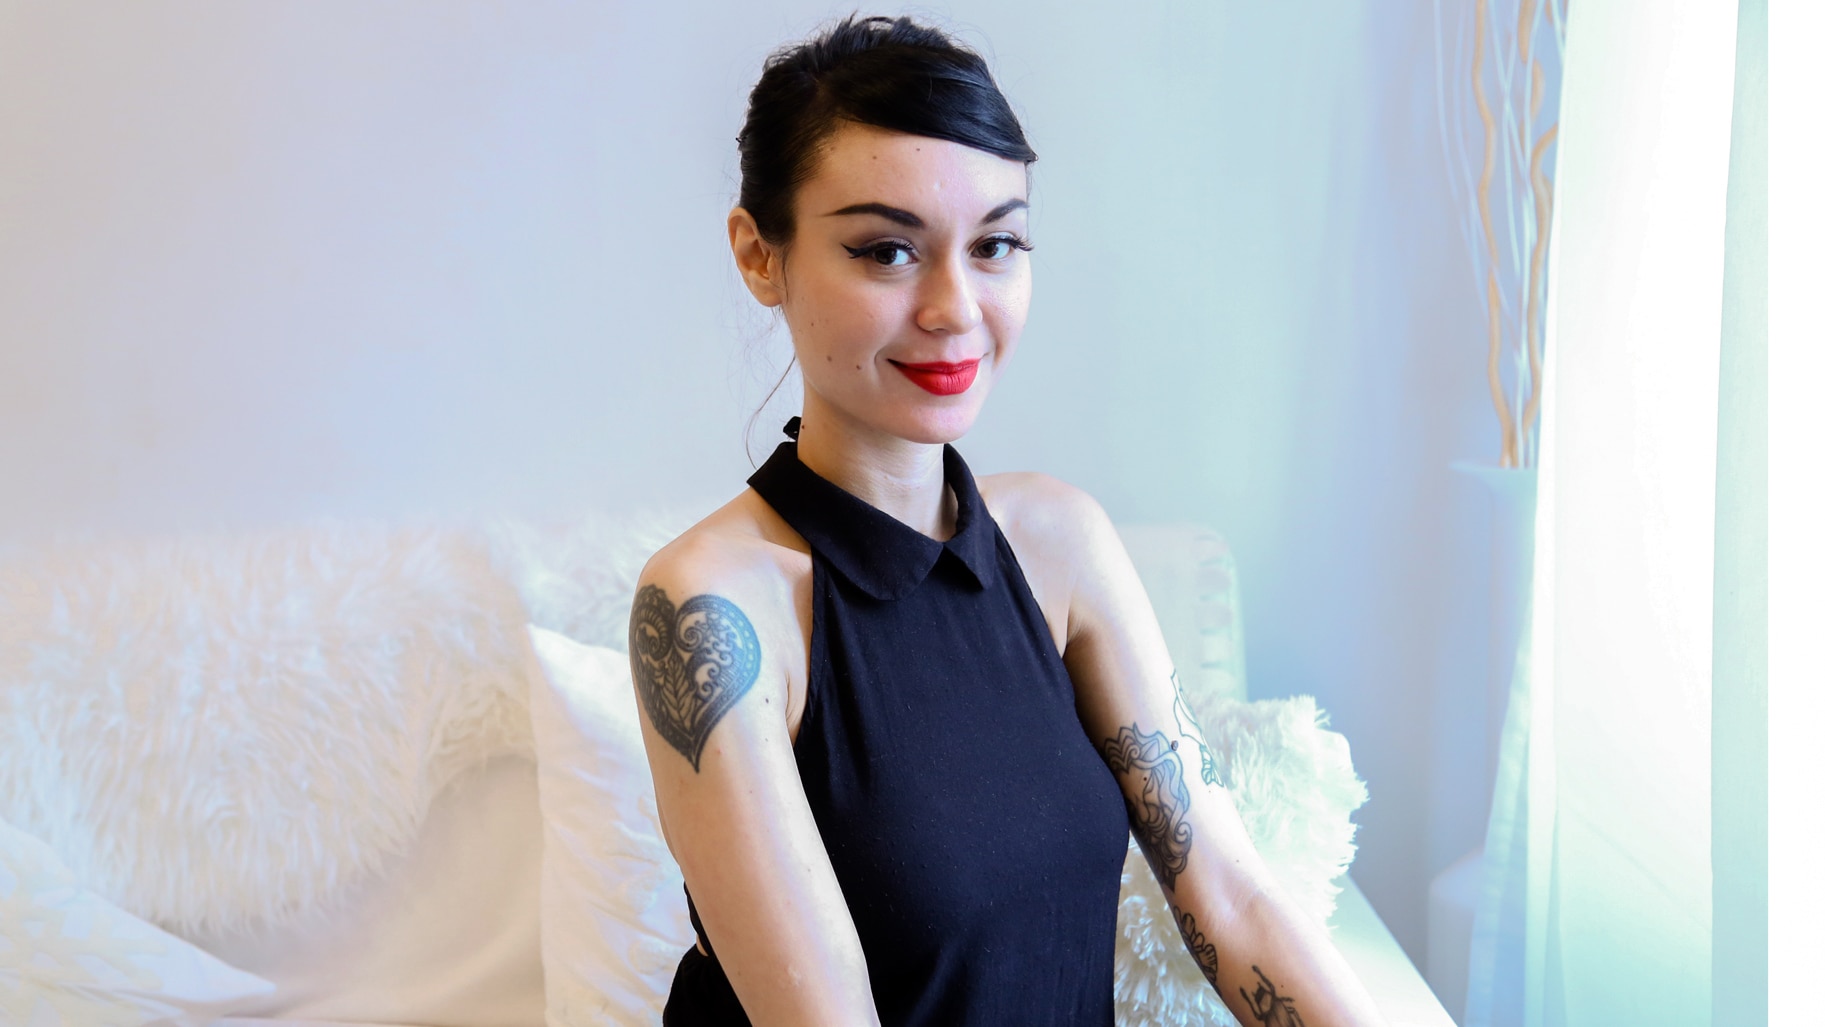 Meet Sarah Gaugler, Tattoo Artist and Lead Singer of Turbo Goth